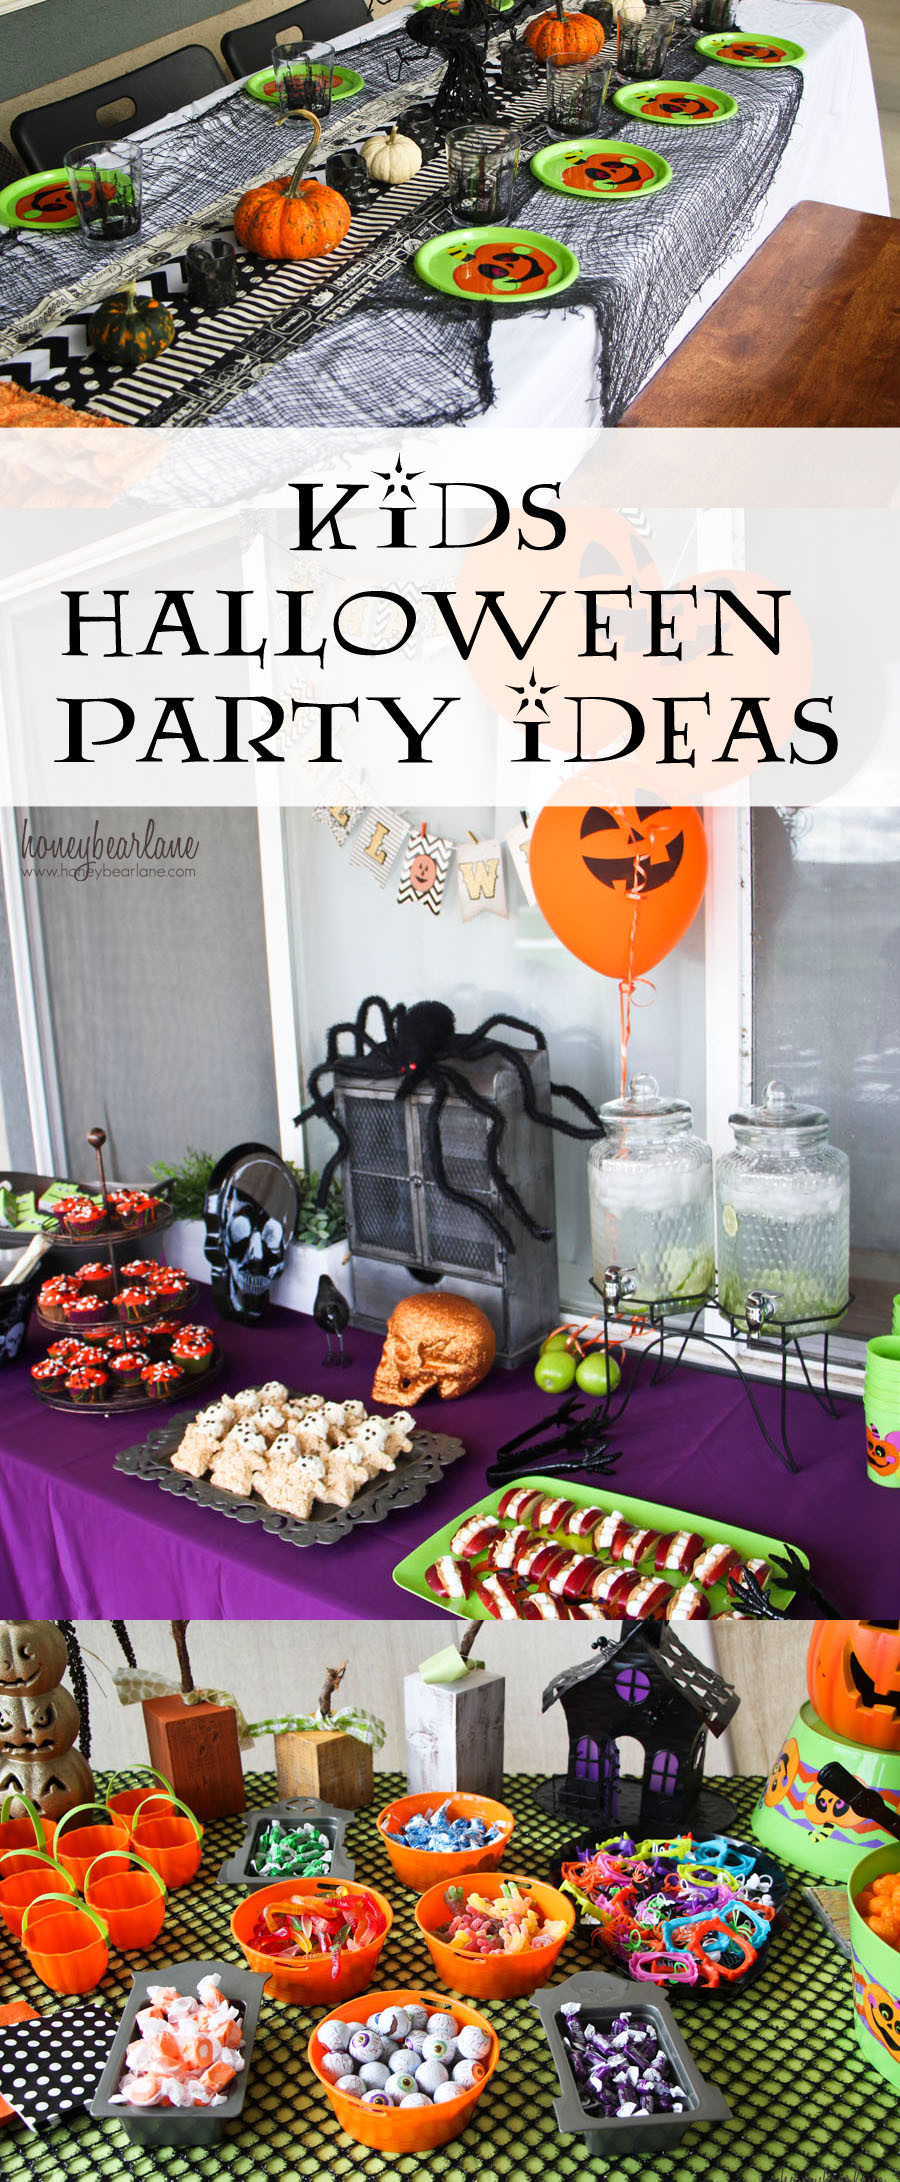 Pinterest Halloween Party Ideas
 Kids Halloween Party Ideas HoneyBear Lane